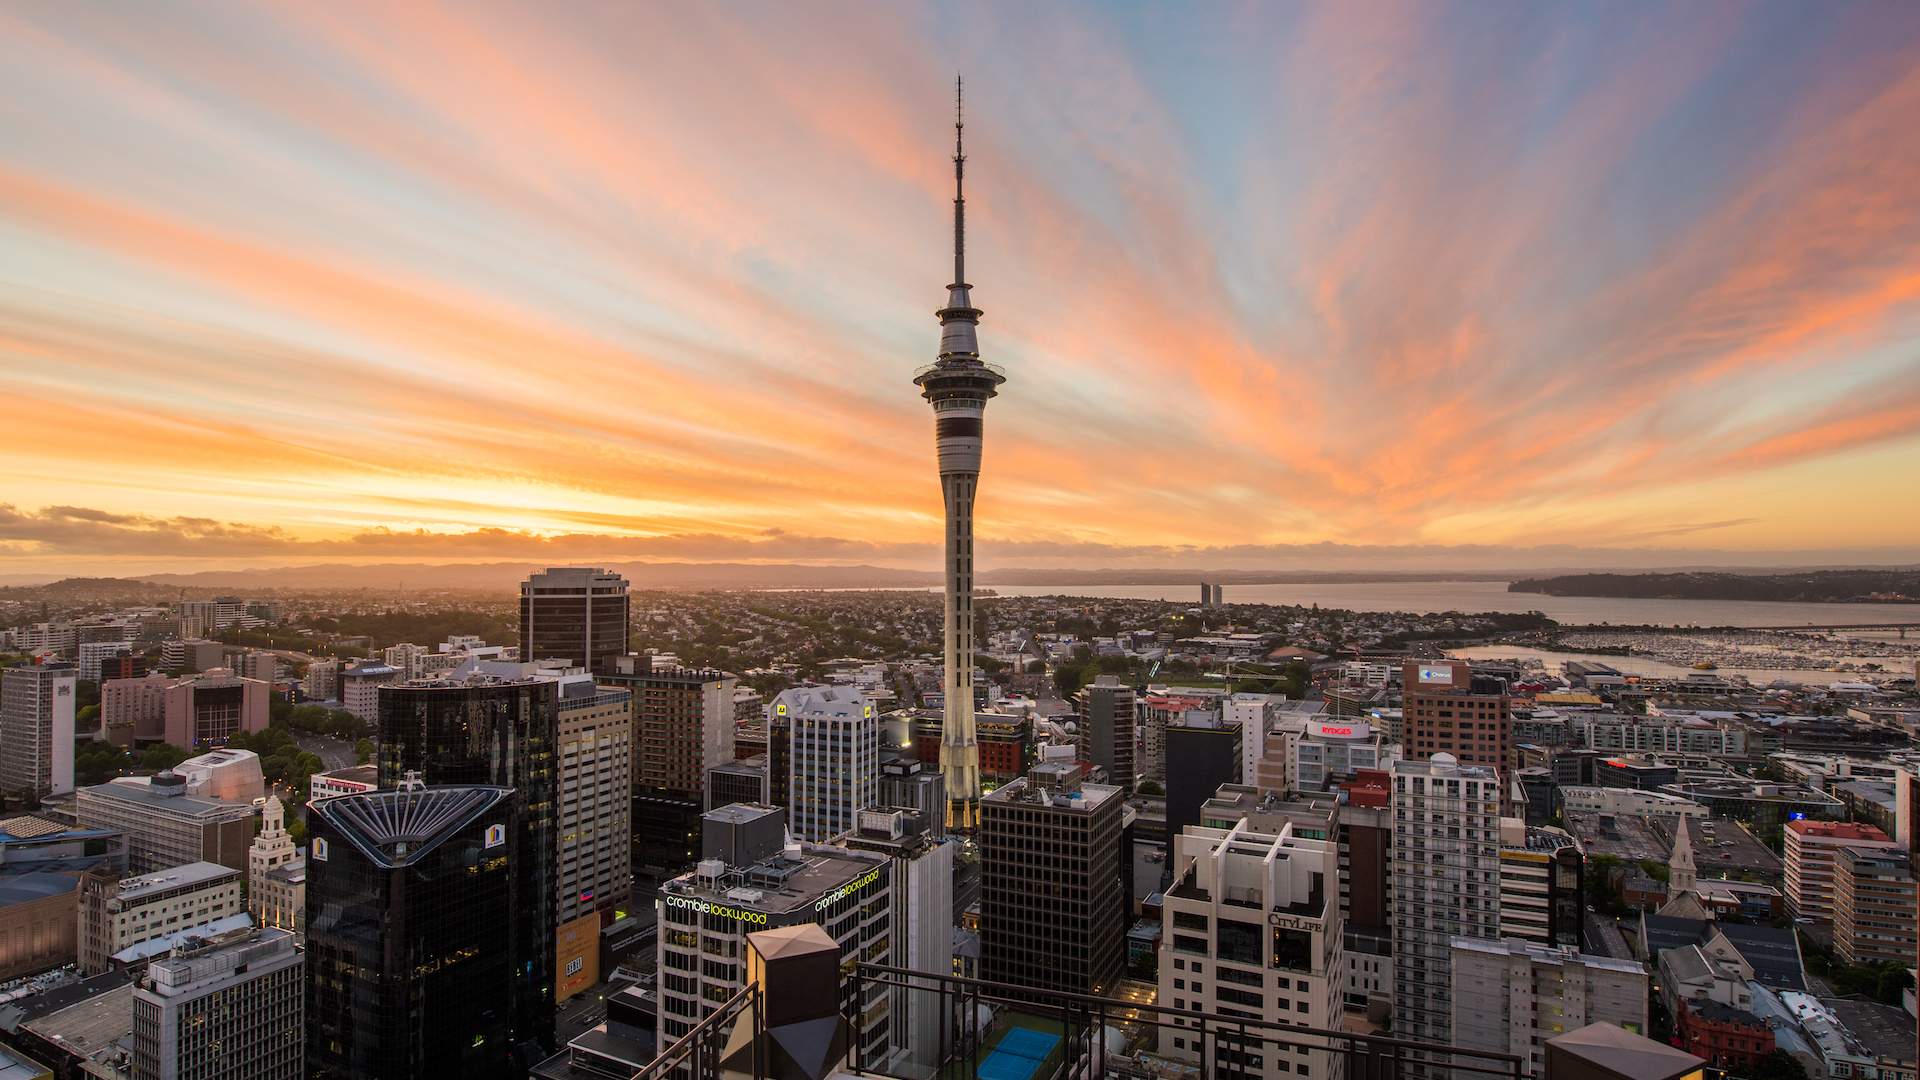 SkyCity Auckland's 25th Anniversary